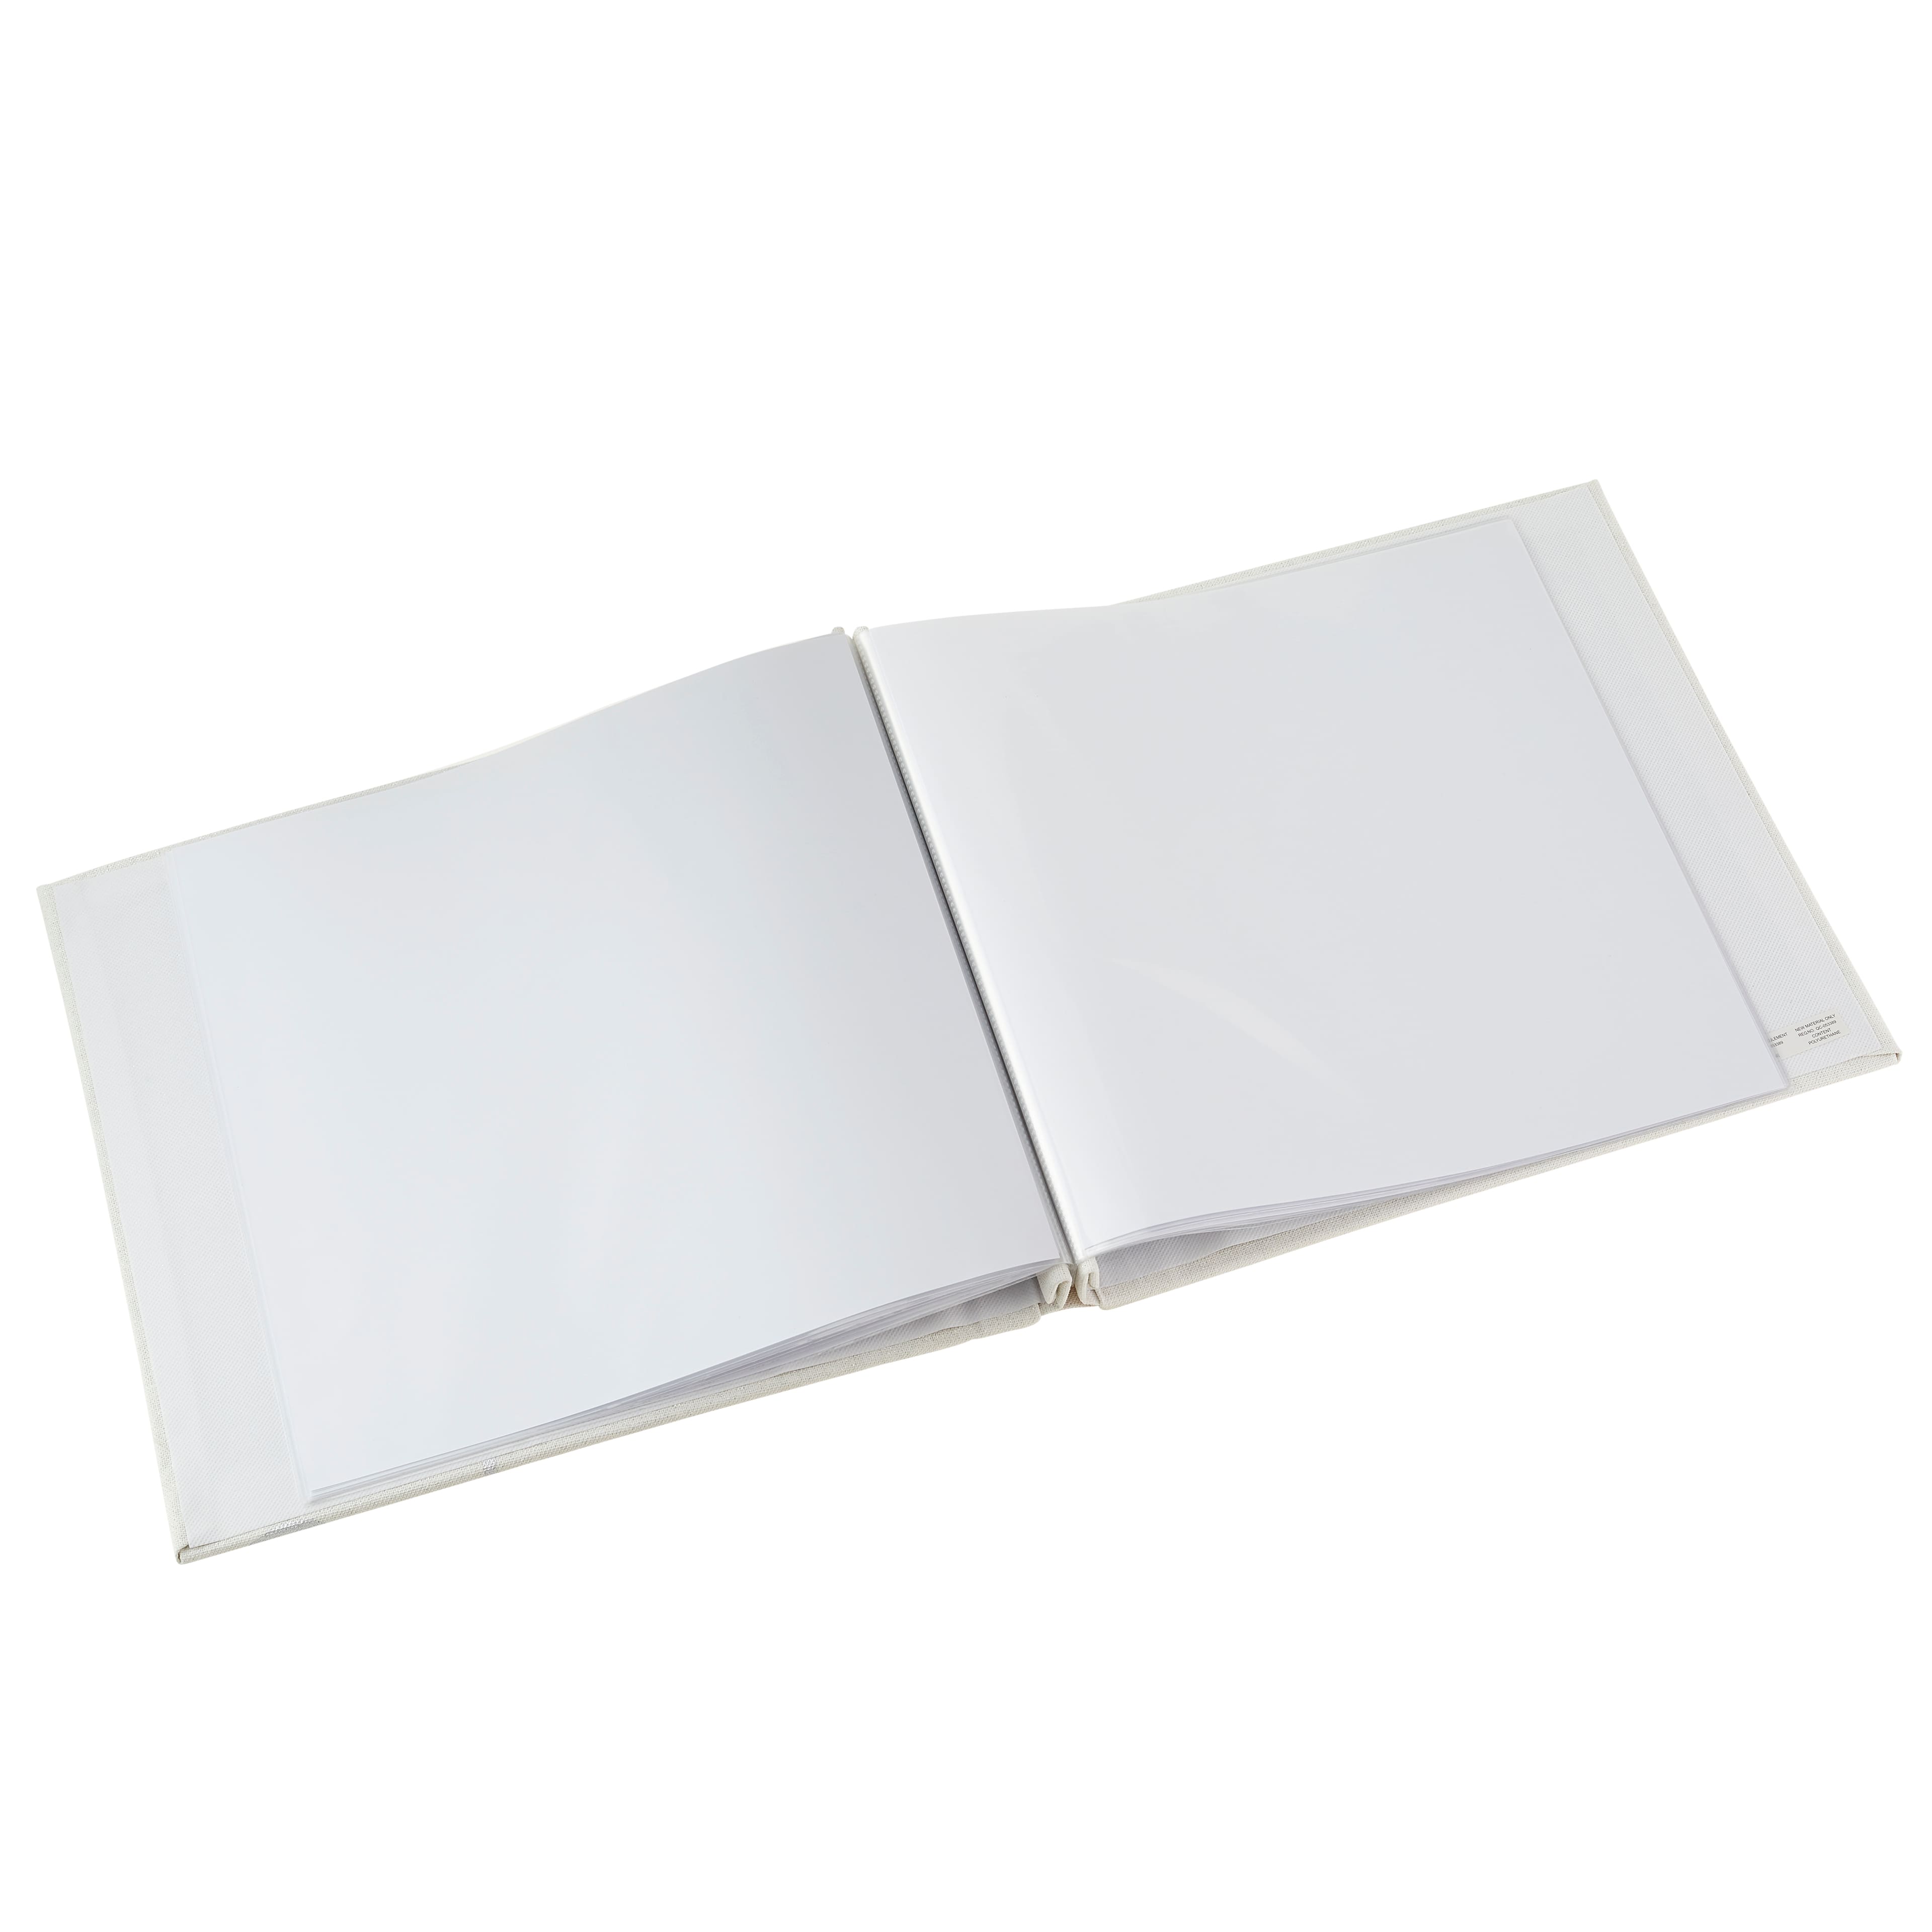 Mr & Mrs - Modern Wedding Scrapbook Paper 12x12 by Reminisce - 5 Sheets